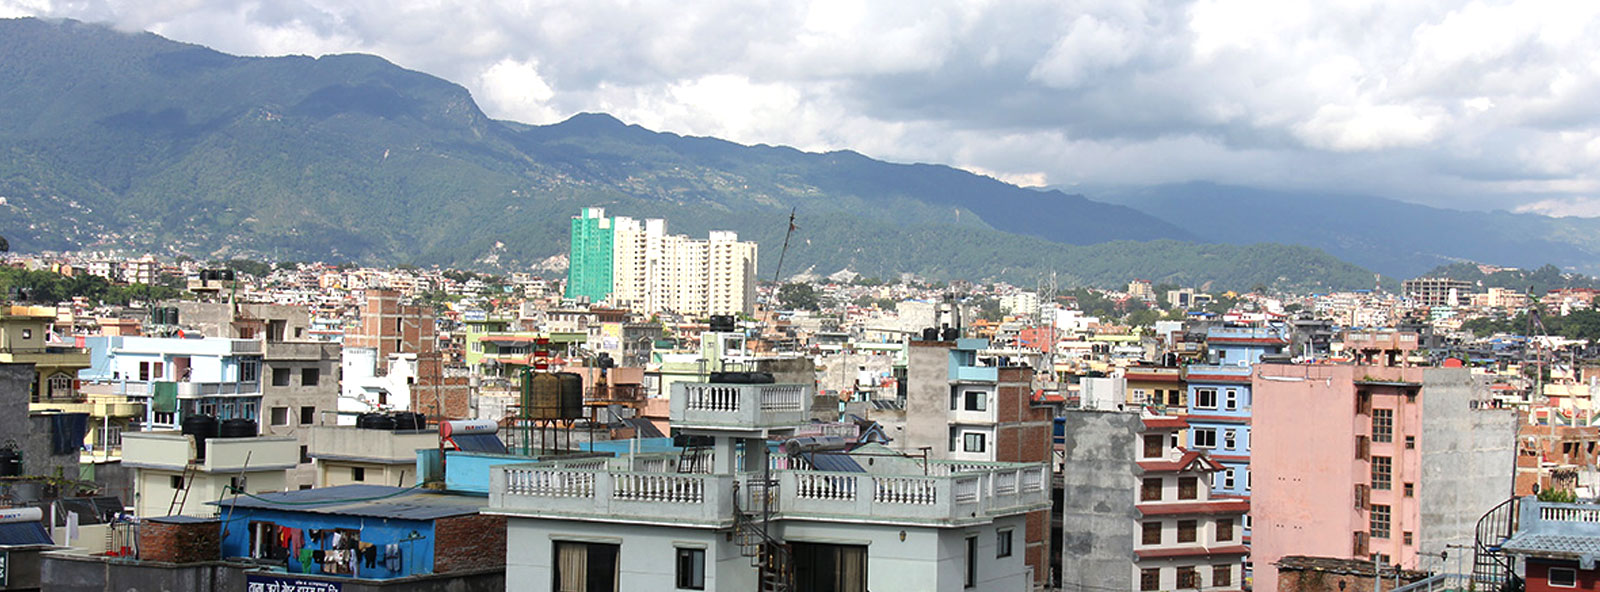 Kathmandu valley view hotel